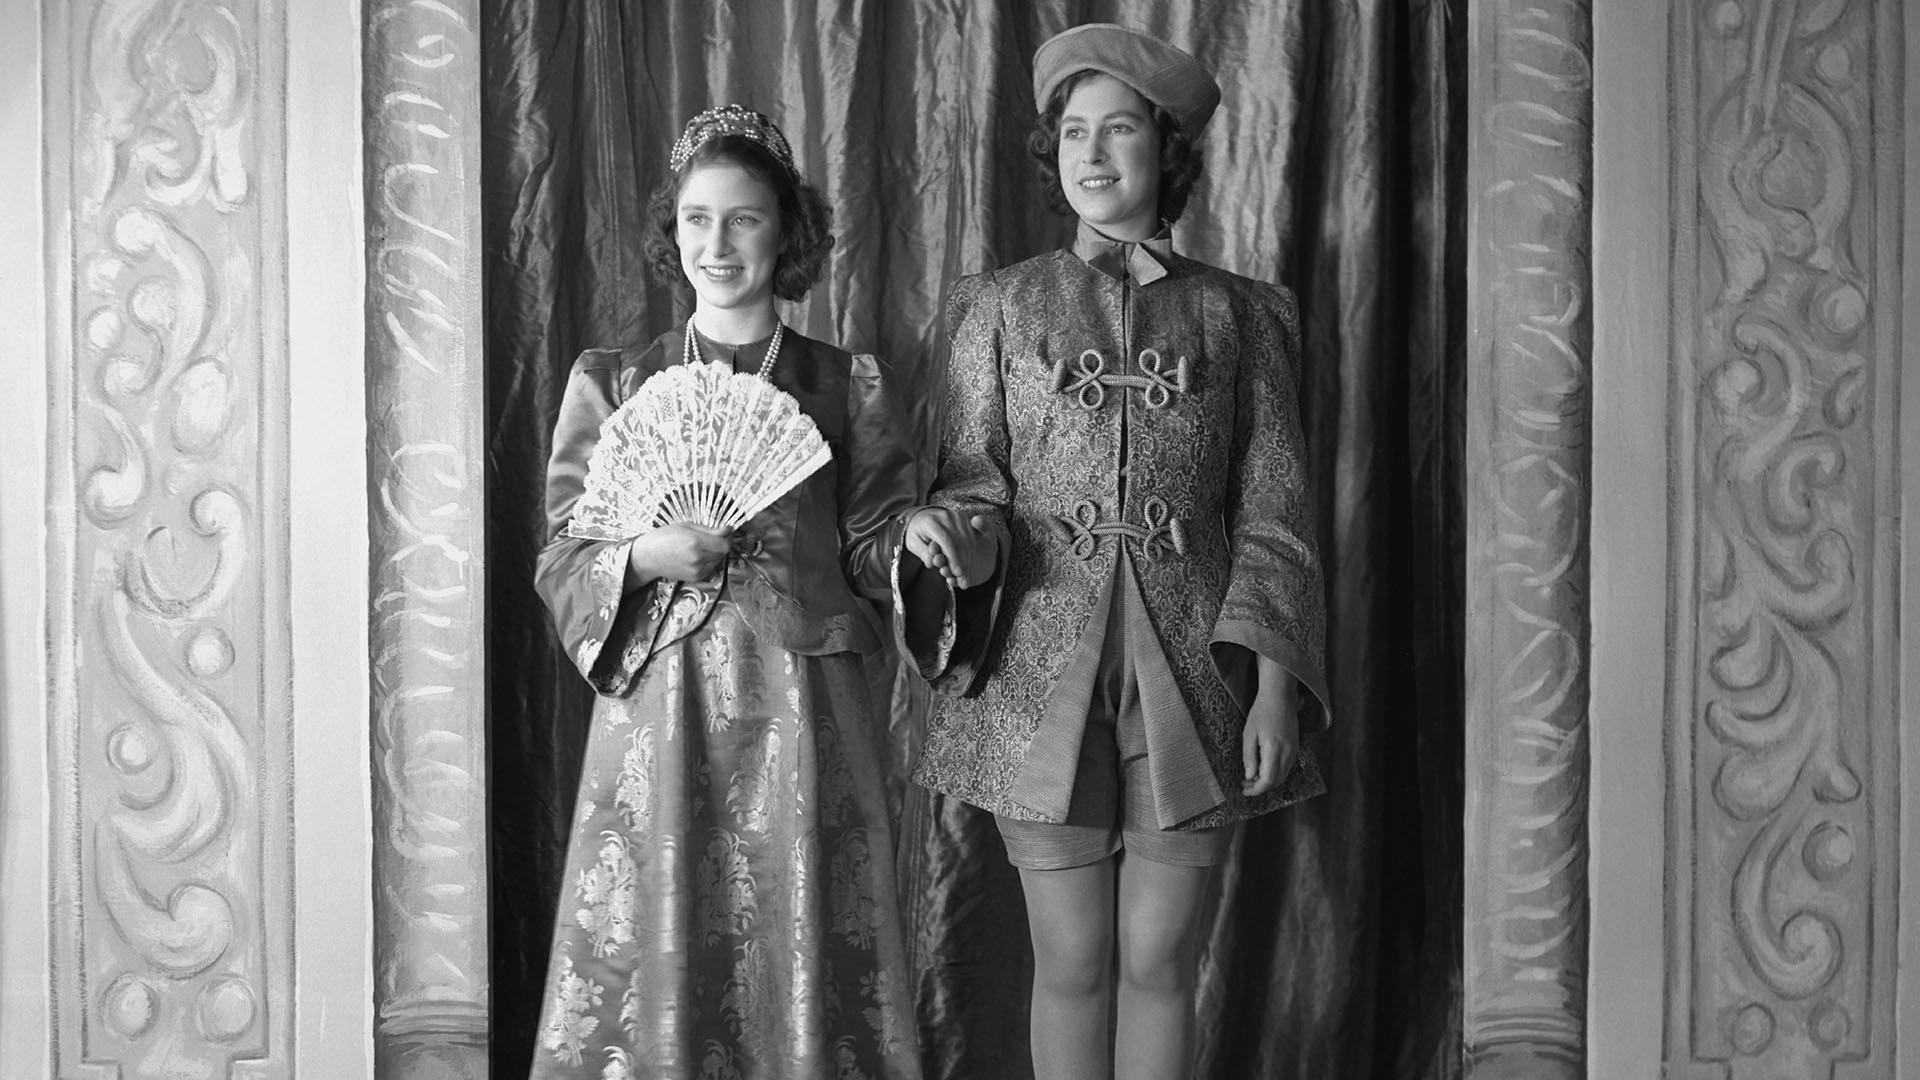 Princess Margaret (1930-2002) and Princess Elizabeth (Queen Elizabeth II), both in costume.